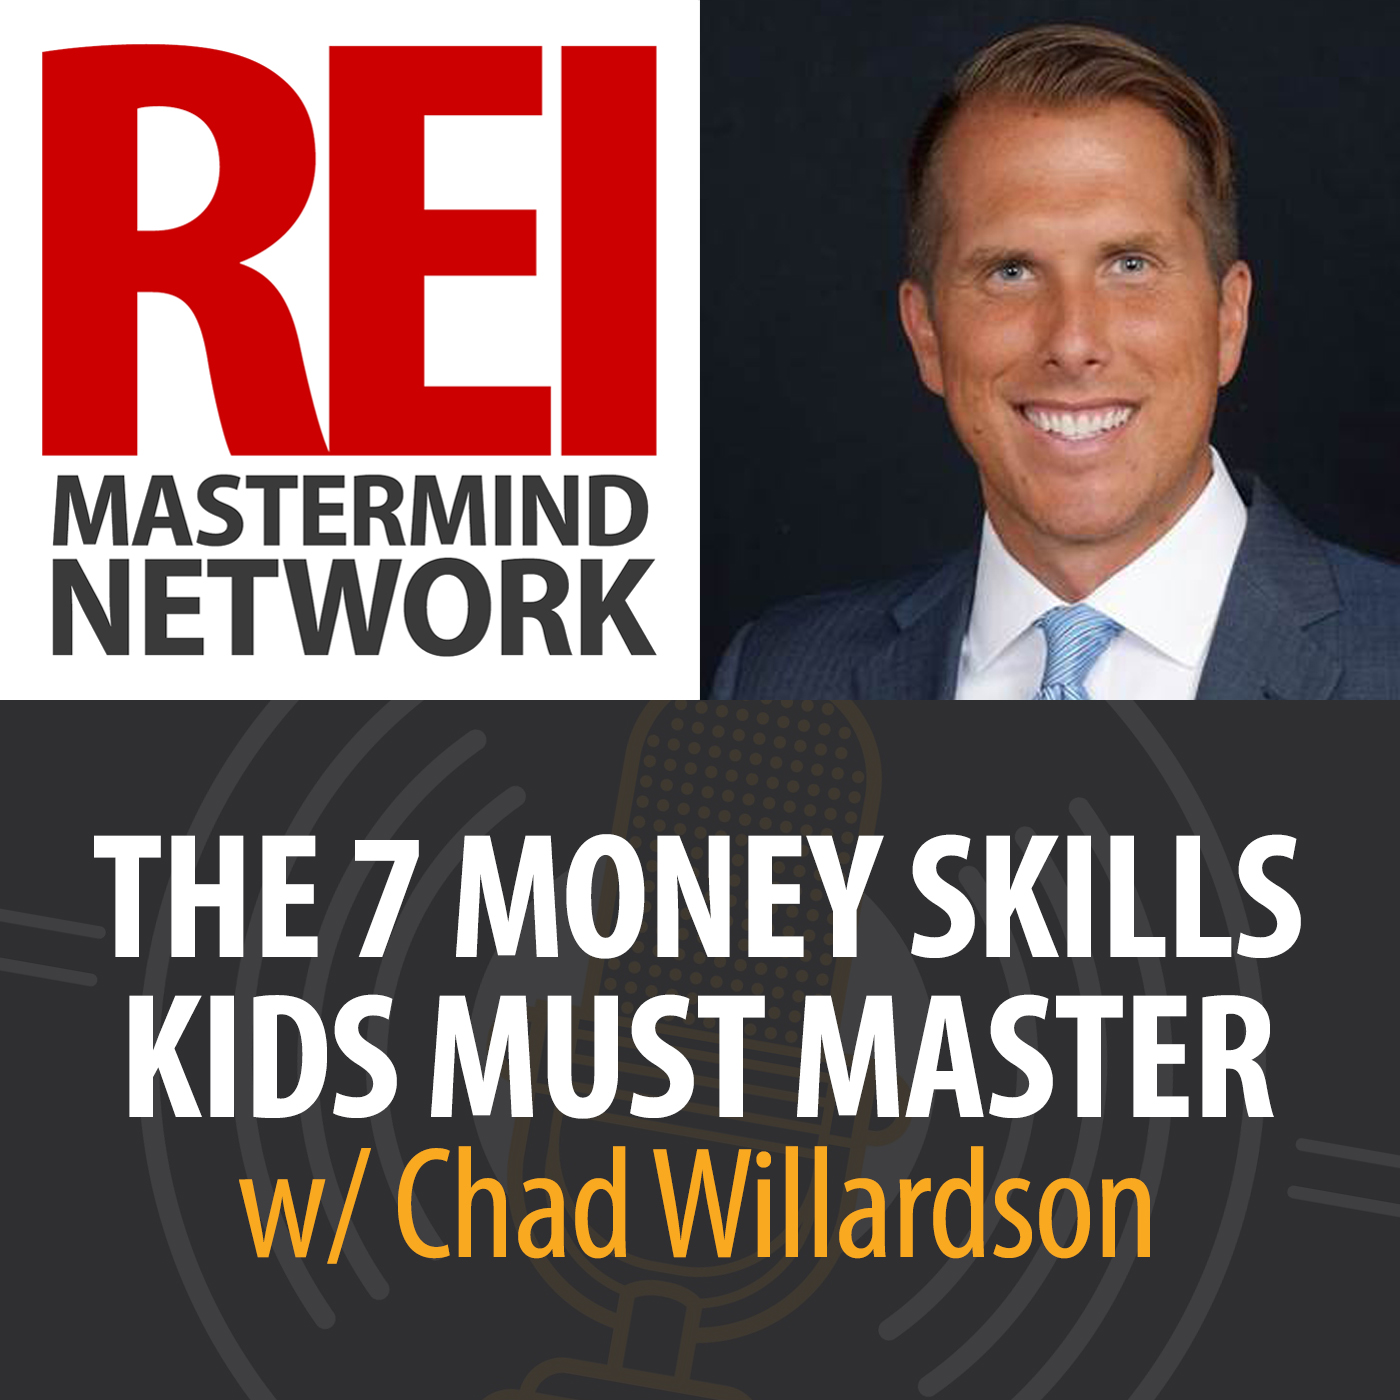 The 7 Money Skills Kids Must Master with Chad Willardson Image